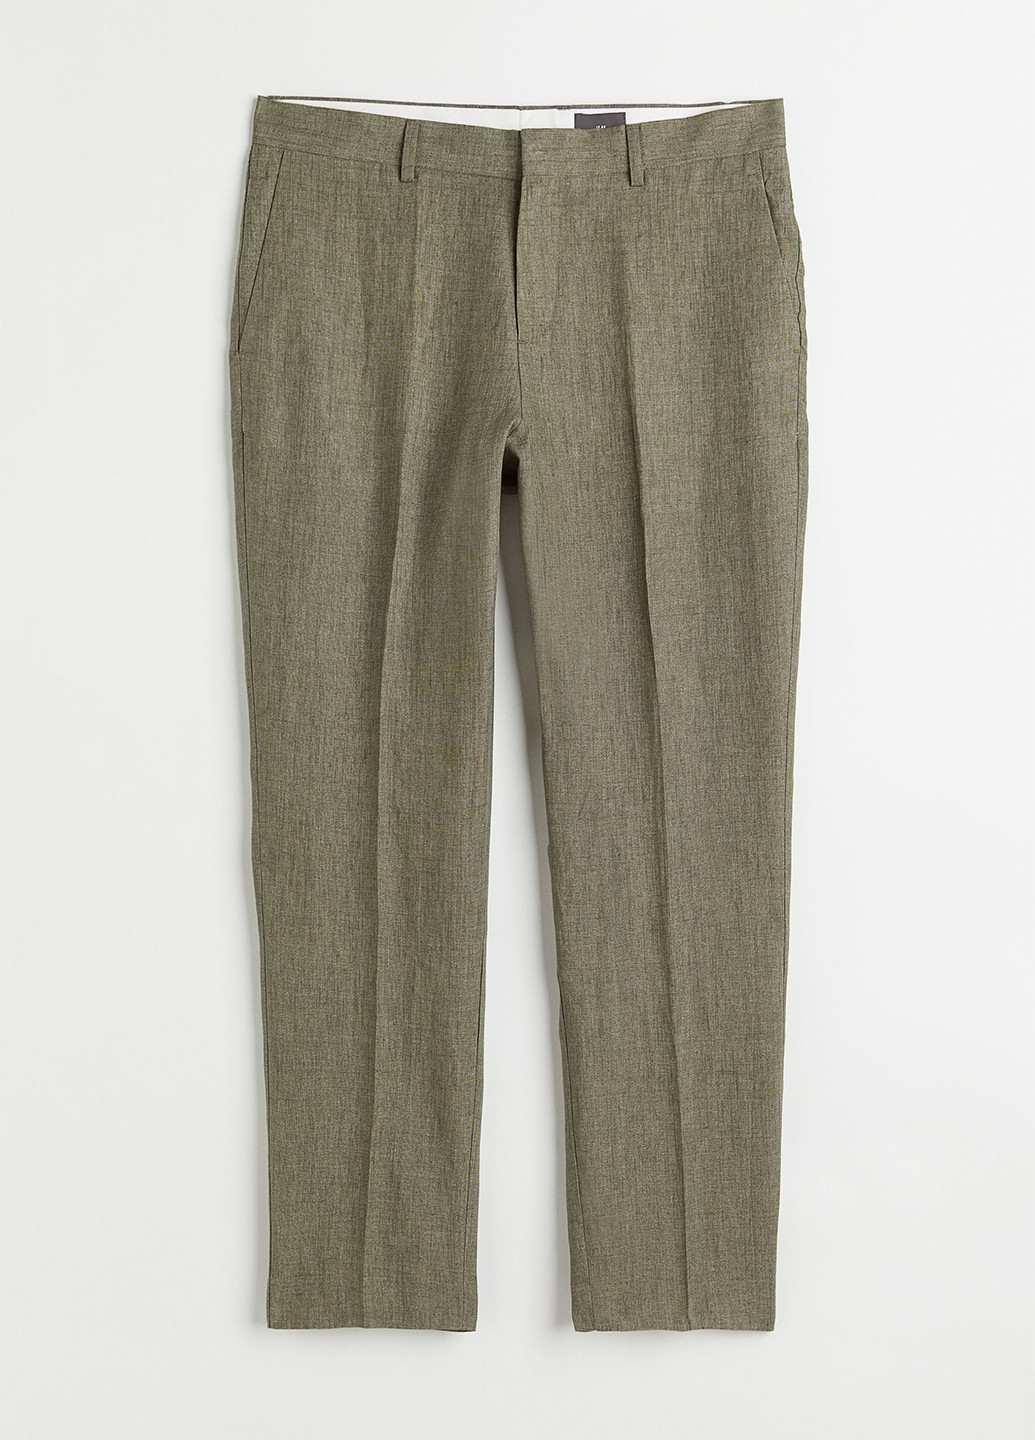 Хаки классические, кэжуал летние прямые брюки H&M